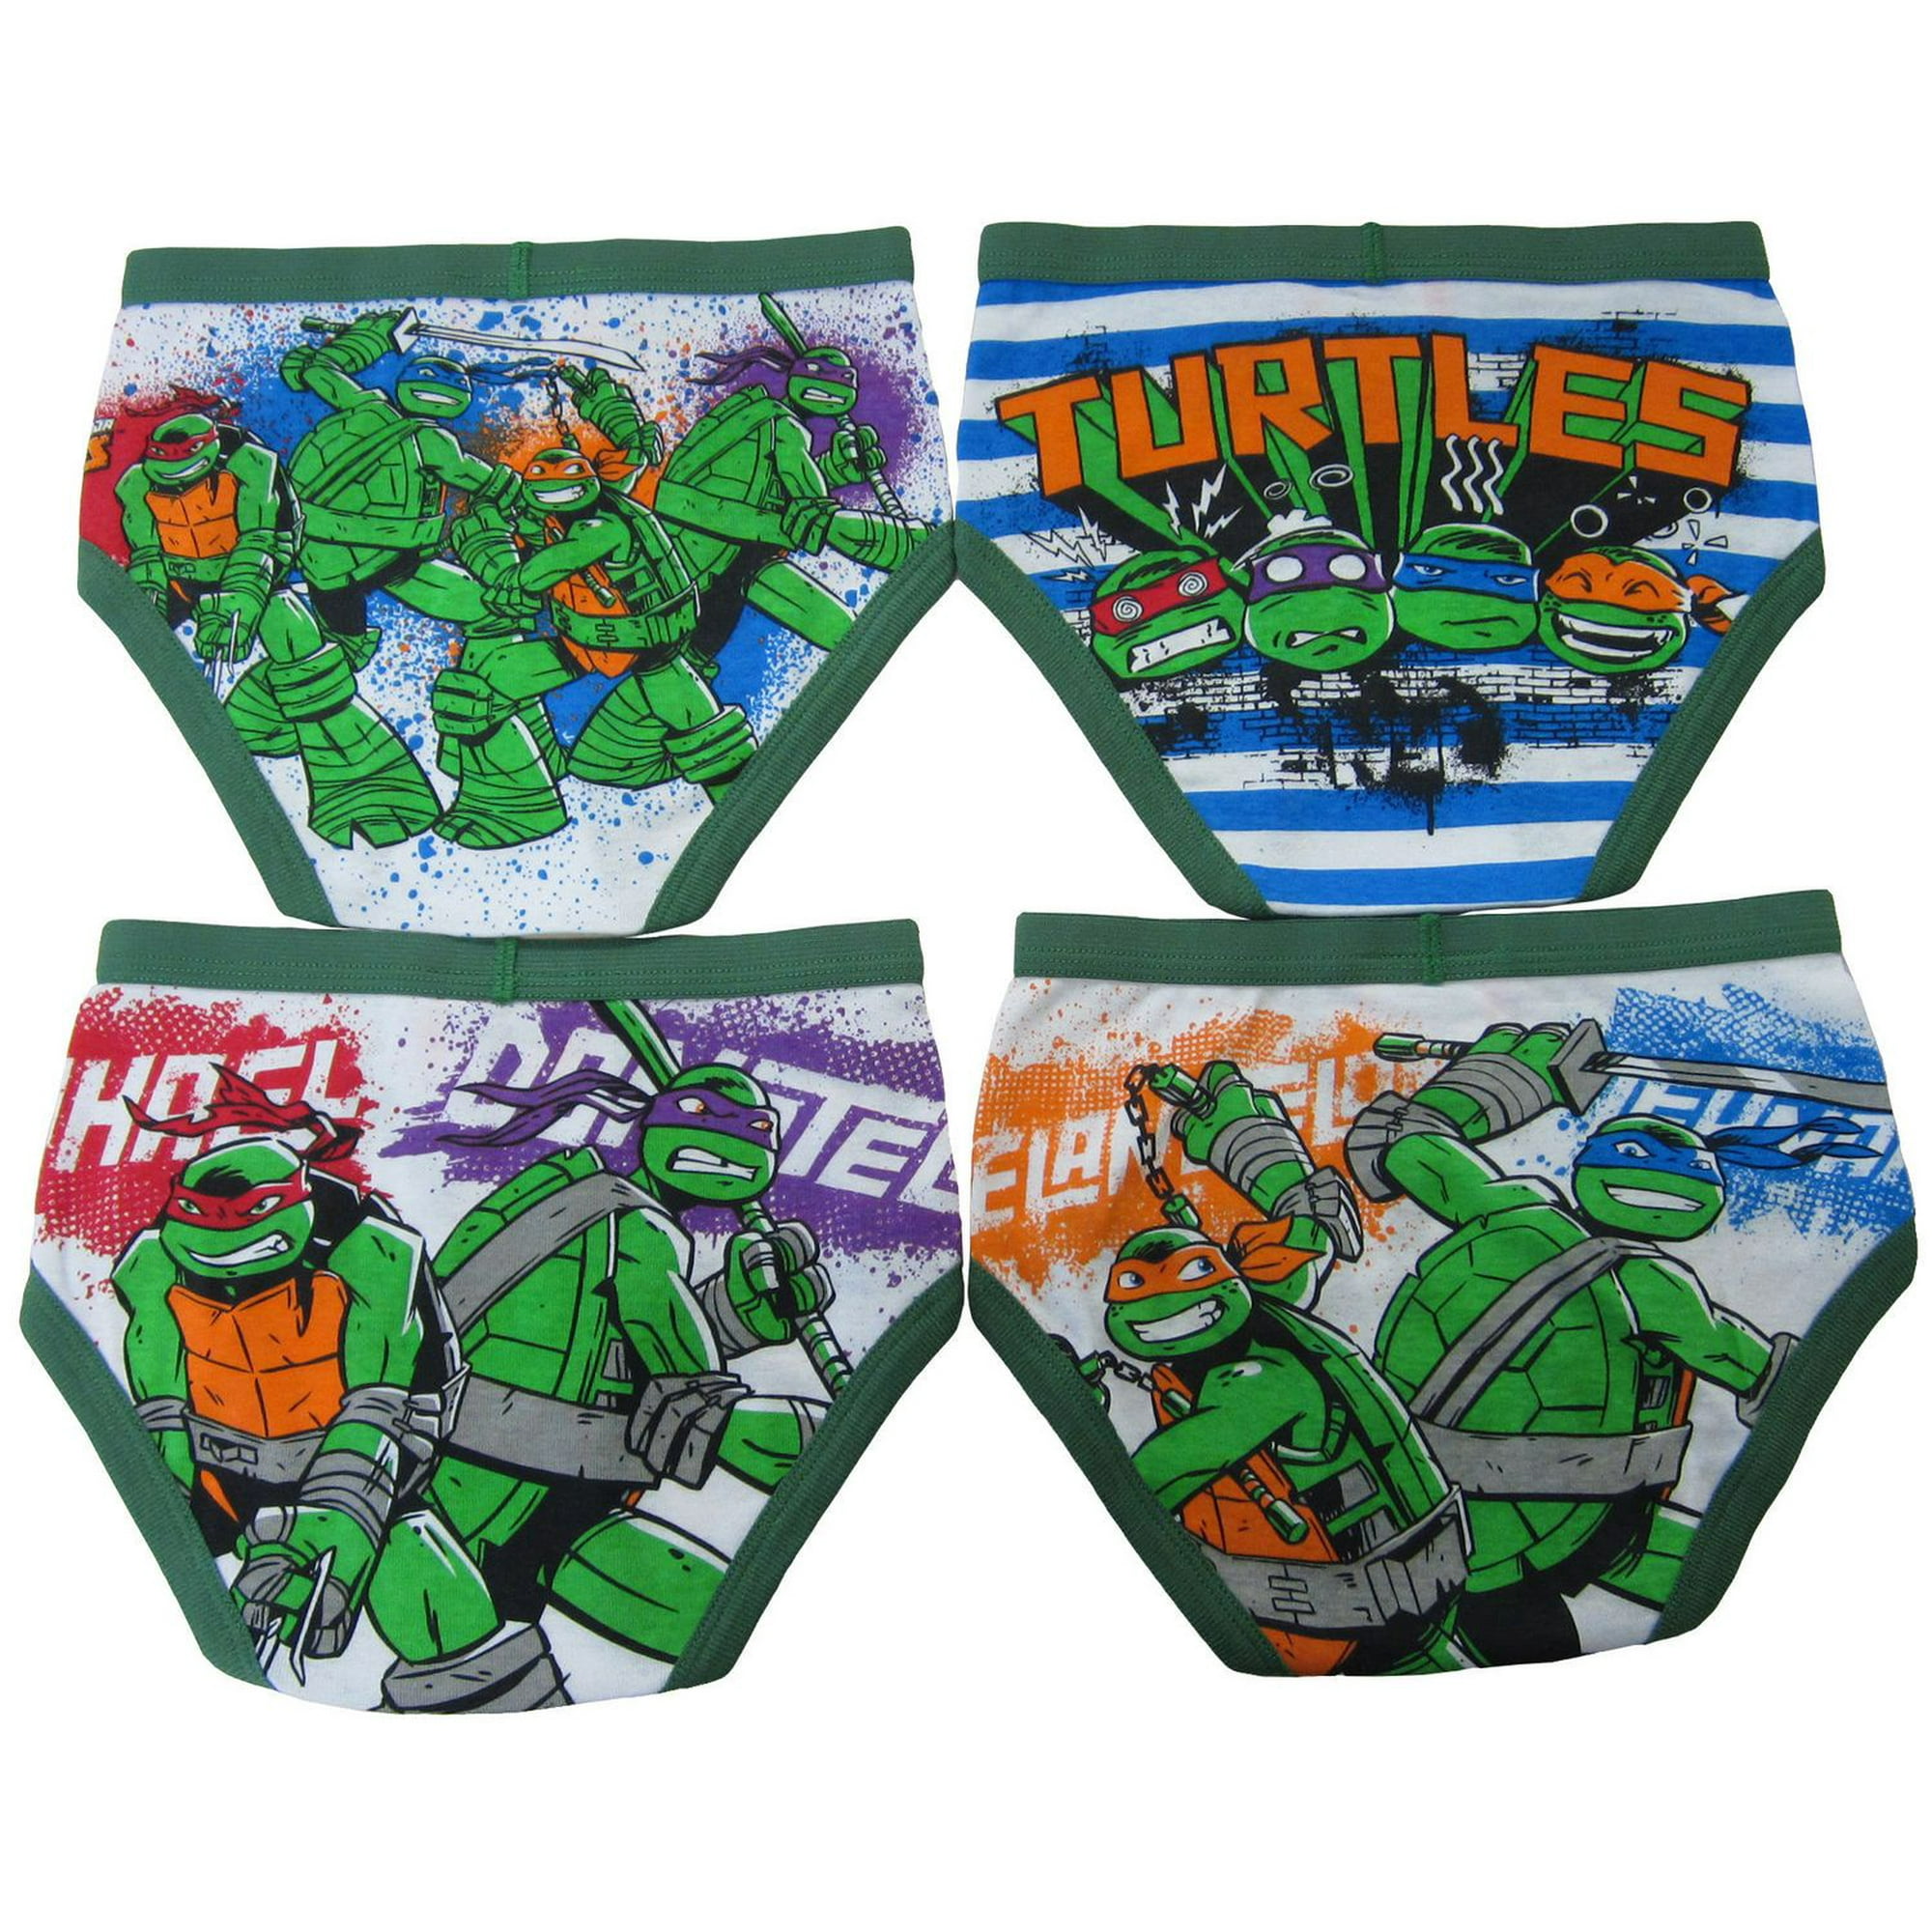 Boys underwear 10 pieces bundle # 31 size 2T-3T 10 briefs paw patrol